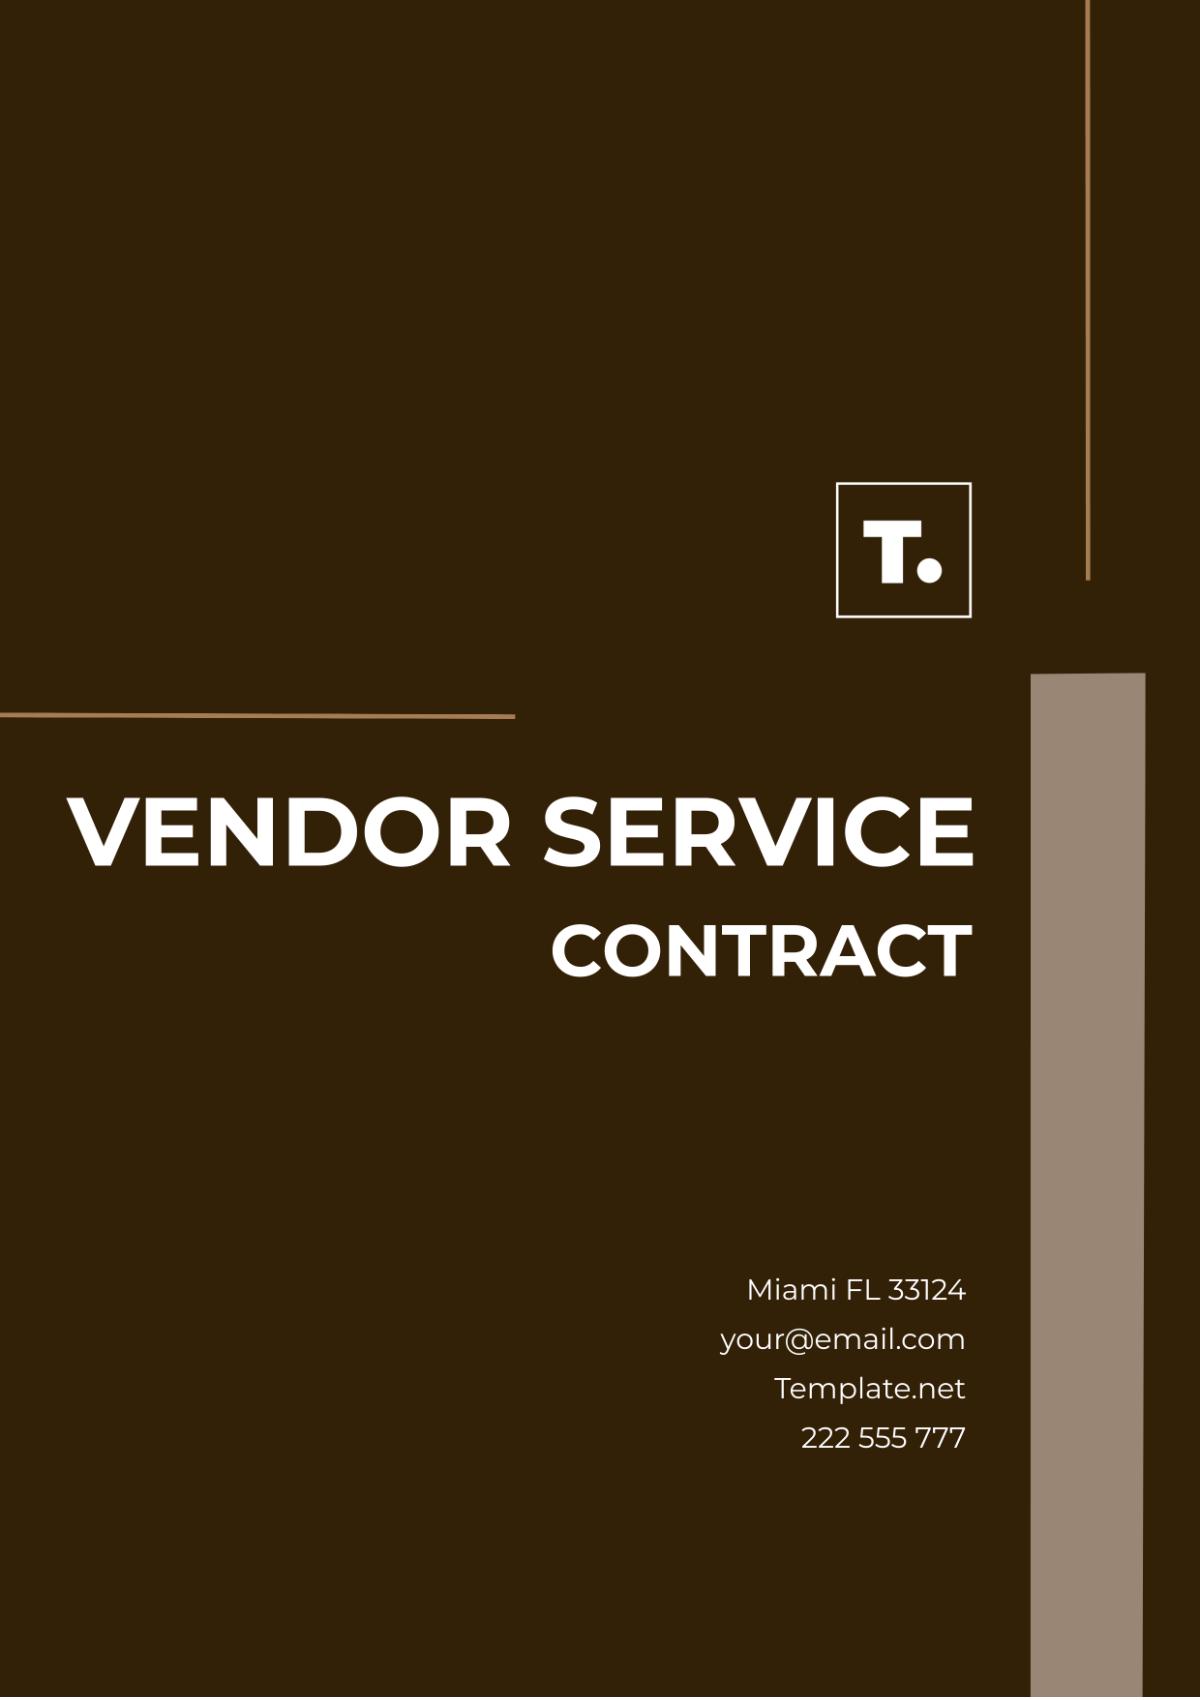 Vendor Service Contract Template